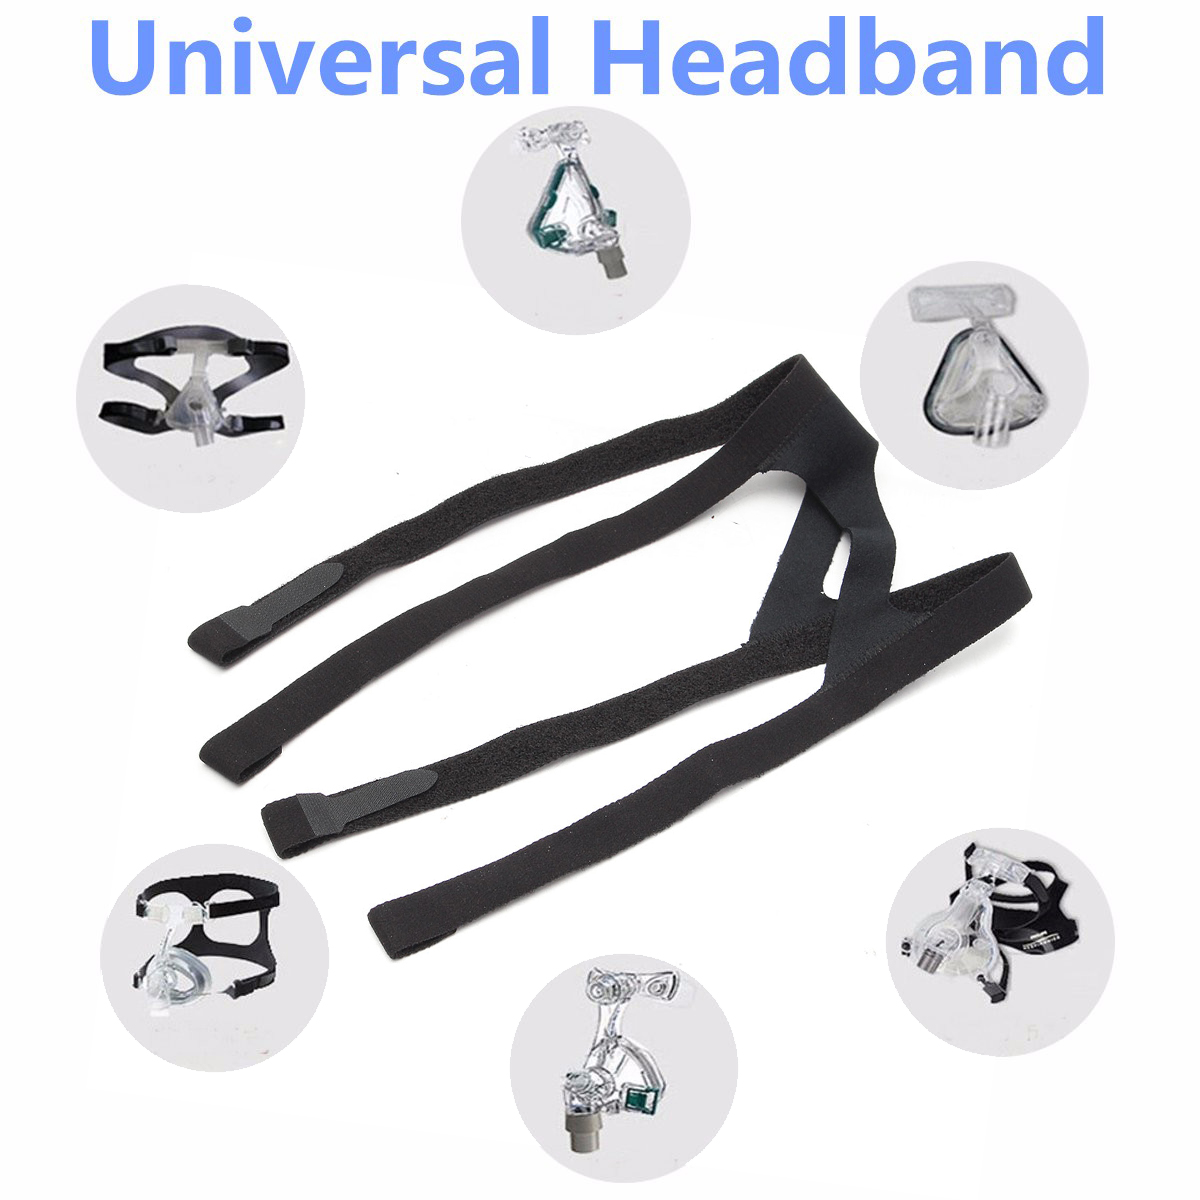 Universal-Headgear-Black-Replacement-Ventilator-Part-Headband-Buckle-Without-Mask-1301298-1